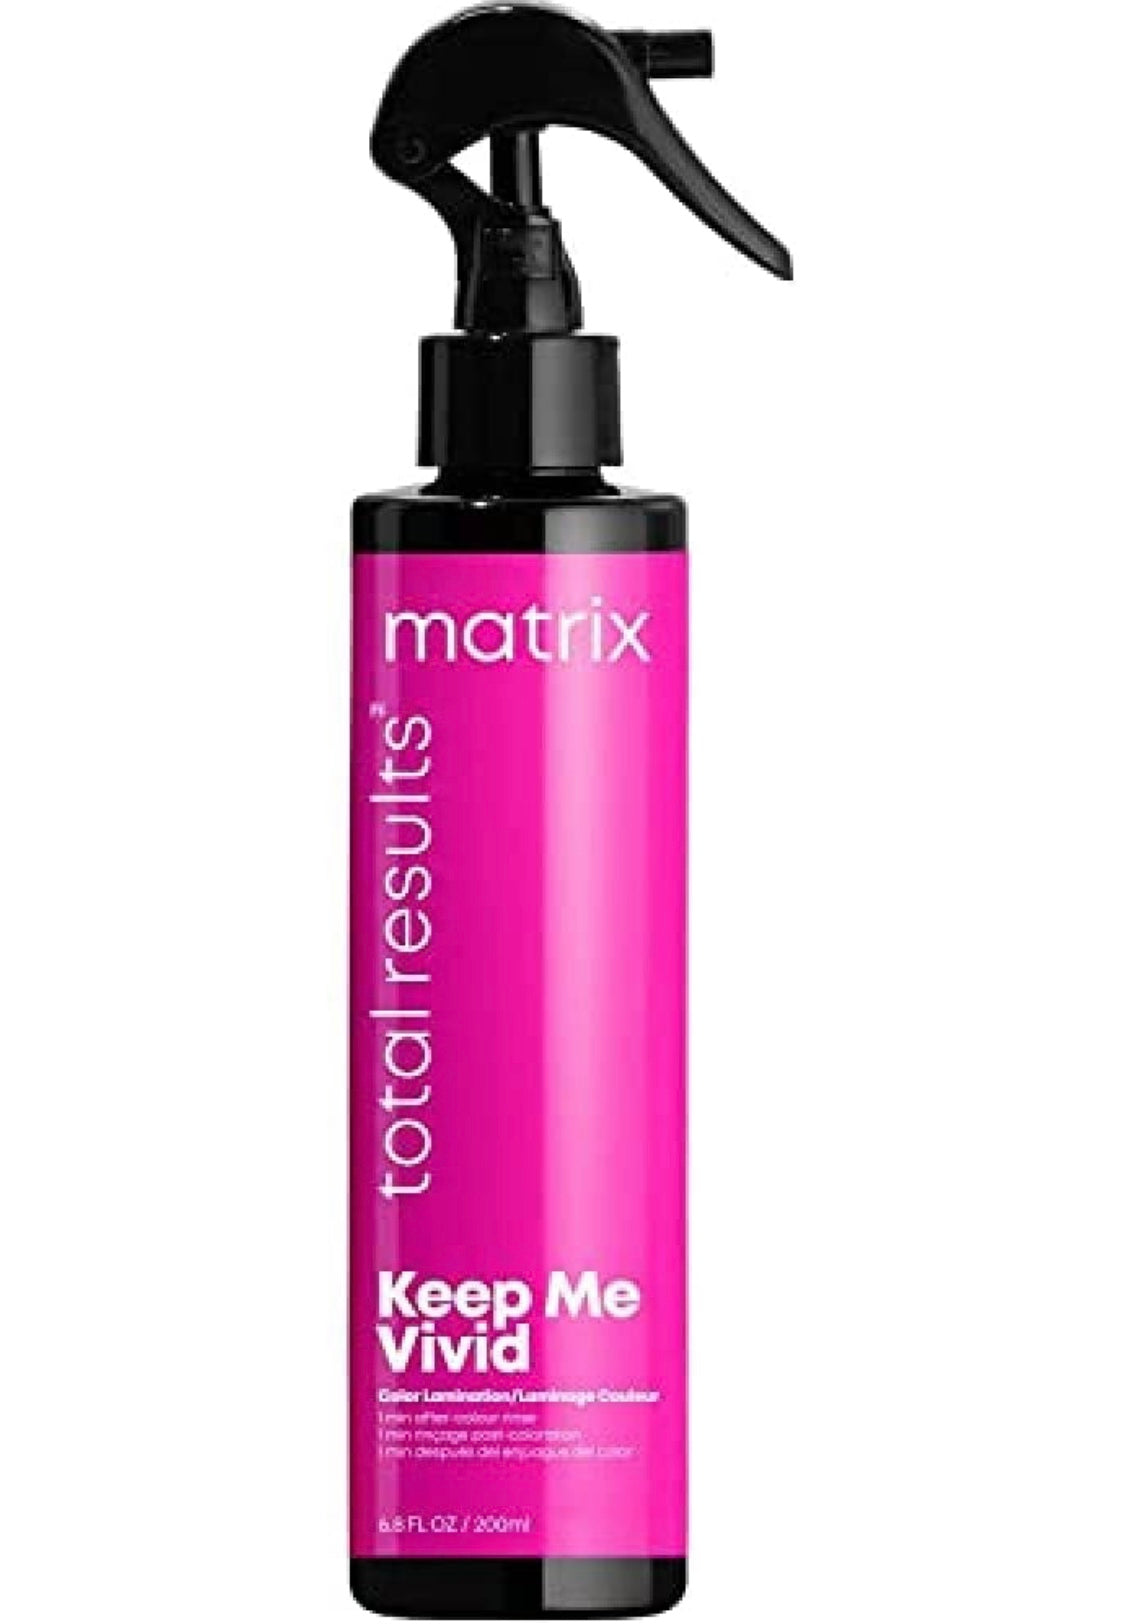 Matrix - Keep me vivid 6.8 fl. oz./ 200 ml